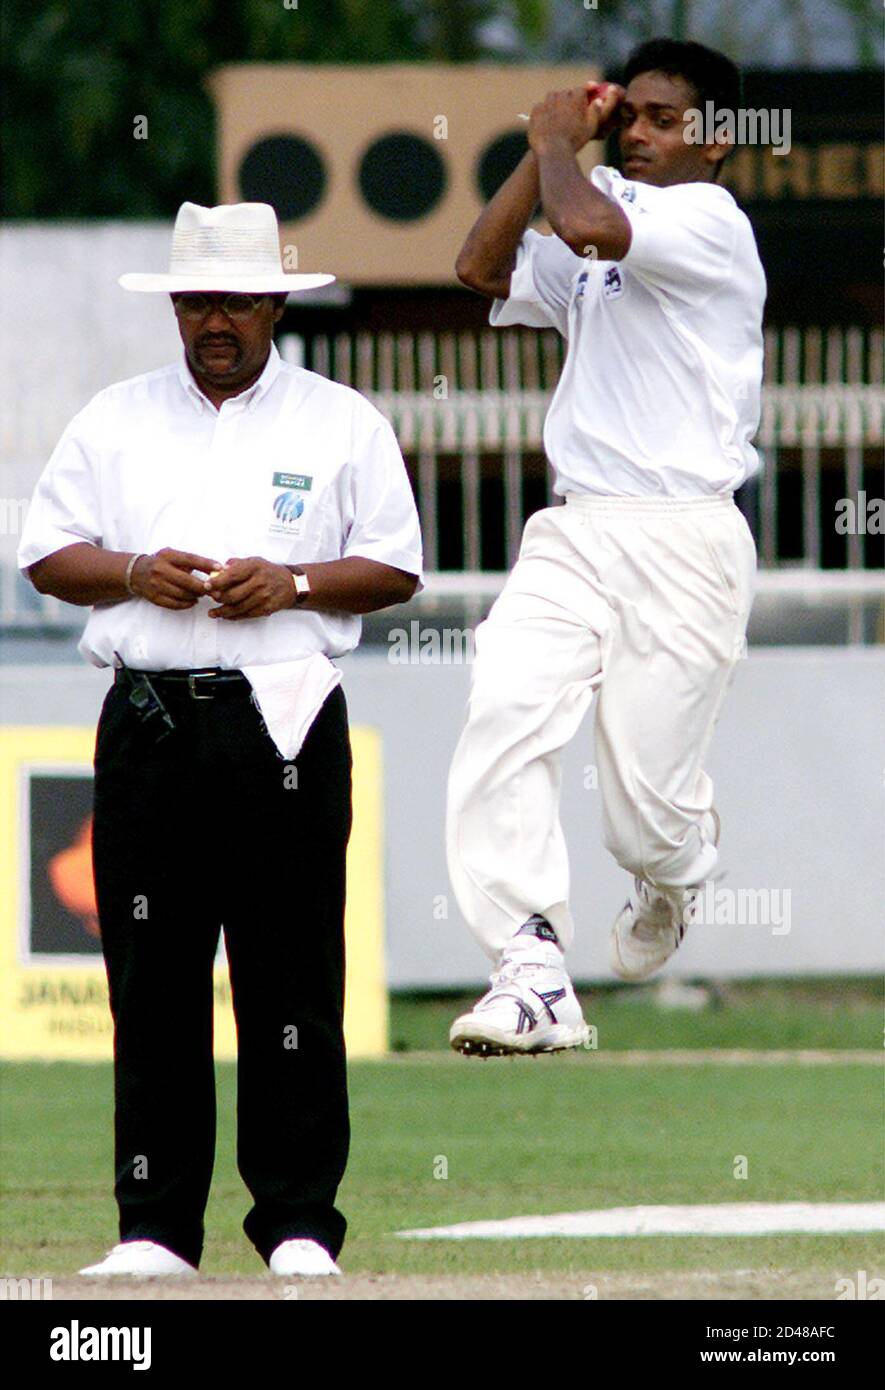 Sri Lankan bowler Buddhika Fernando (R) bowls as umpire Peter Manuel looks on, on the fourth day the first cricket test between Sri Lanka and Zimbabwe in Colombo, Sri Lanka December 31, 2001. REUTERS/Anuruddha Lokuhapuarachchi  AL/DL Stock Photo